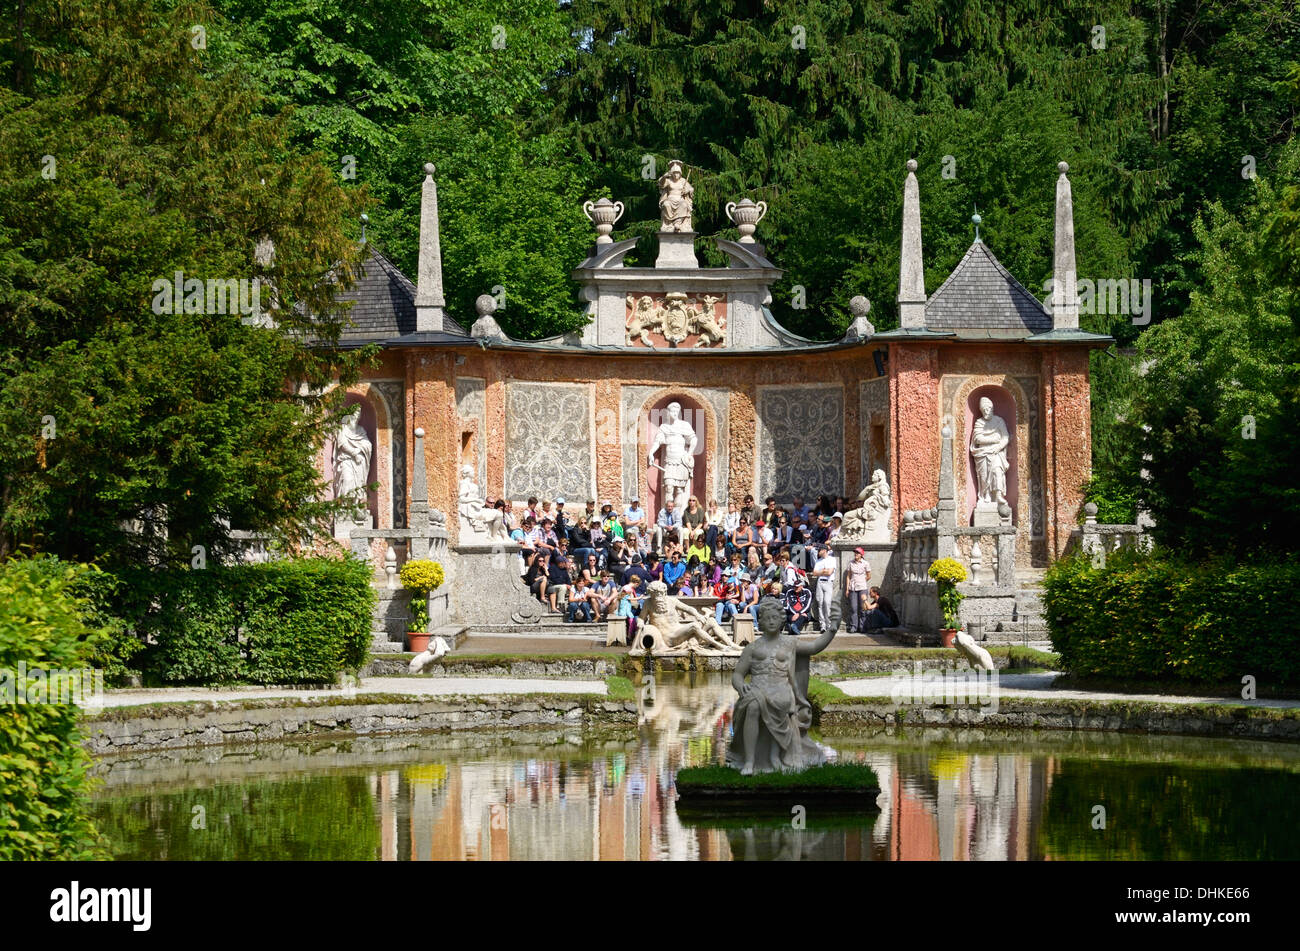 Theatre And Water Gardens In Hellbrunn Palace Salzburg Austria